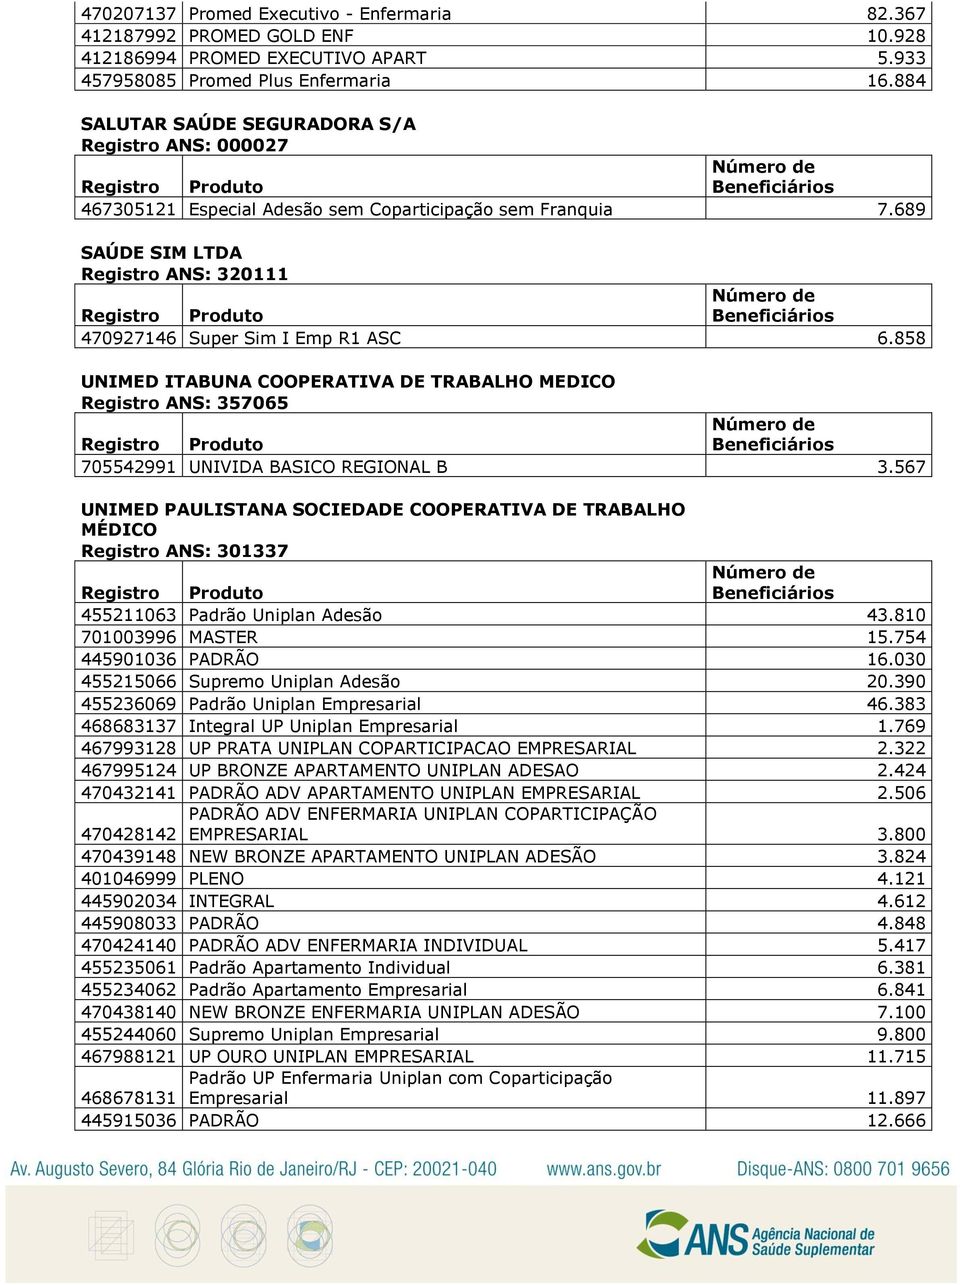 858 UNIMED ITABUNA COOPERATIVA DE TRABALHO MEDICO Registro ANS: 357065 705542991 UNIVIDA BASICO REGIONAL B 3.